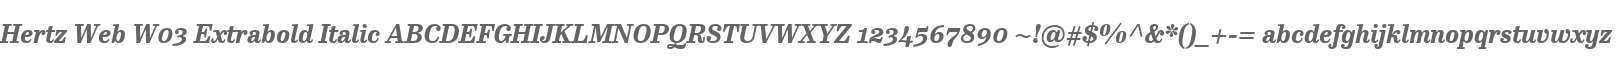 Hertz Web W03 Extrabold Italic